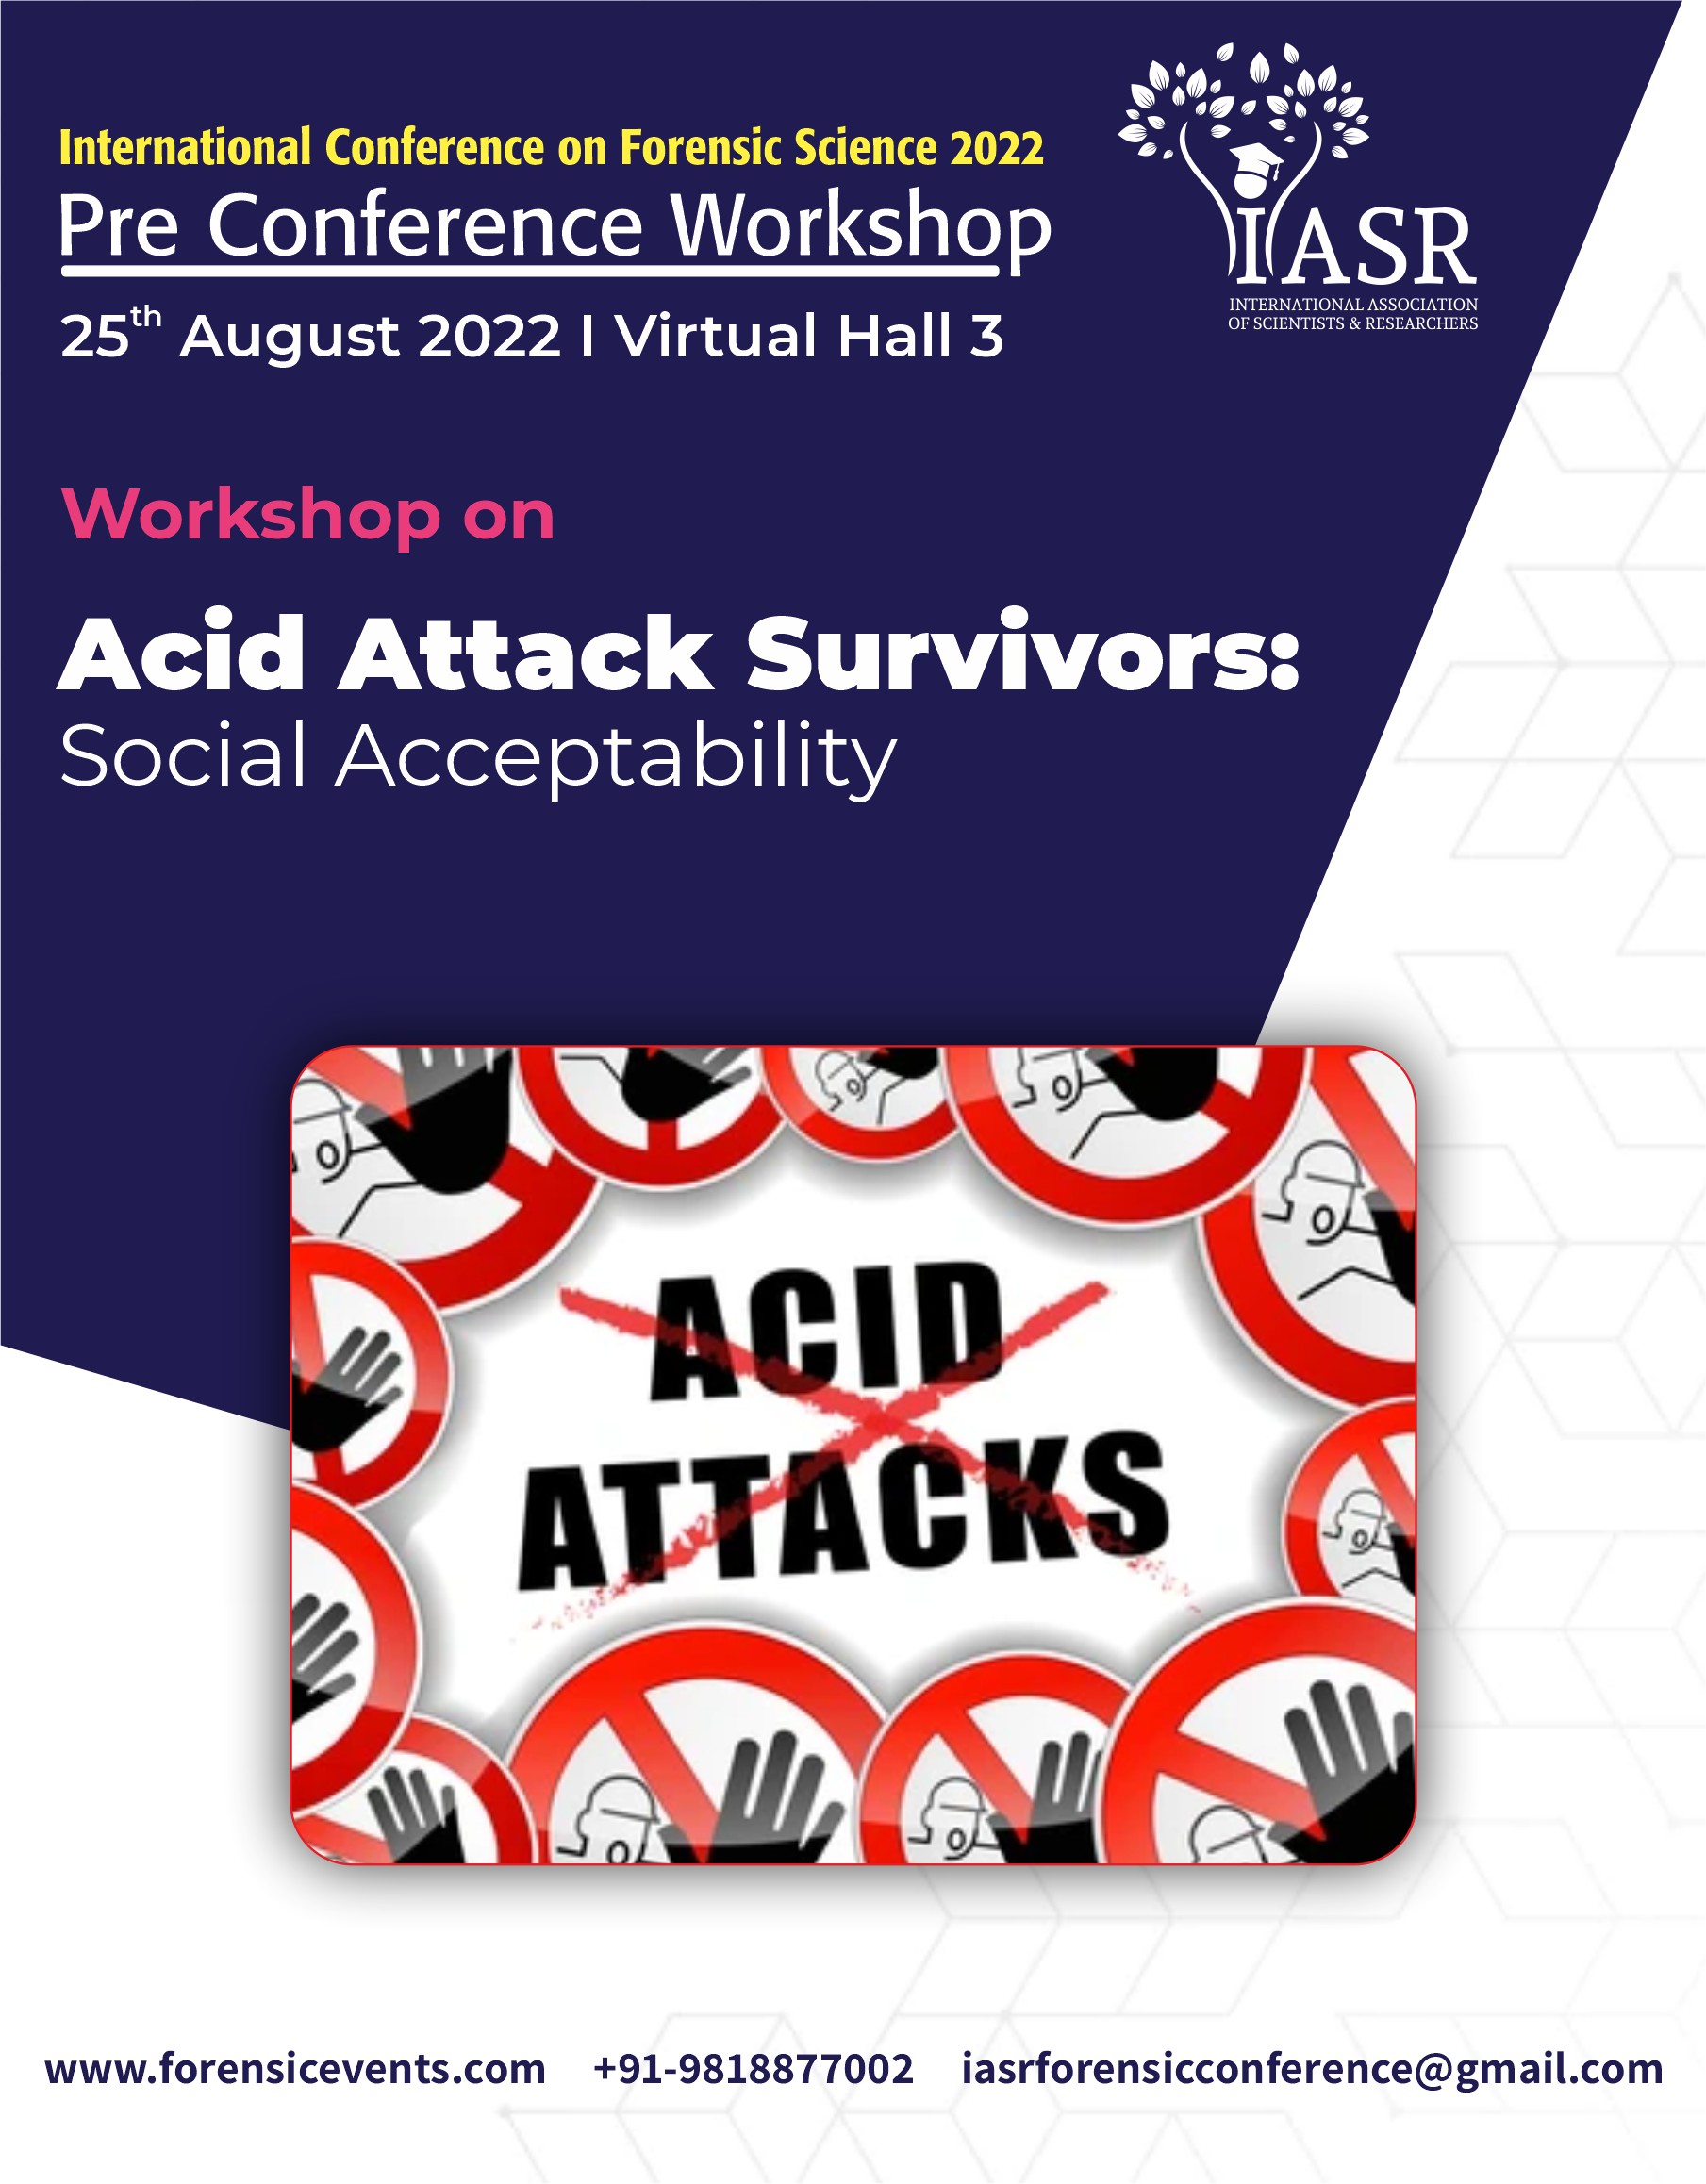 Acid Attack Survivors: Social Acceptability